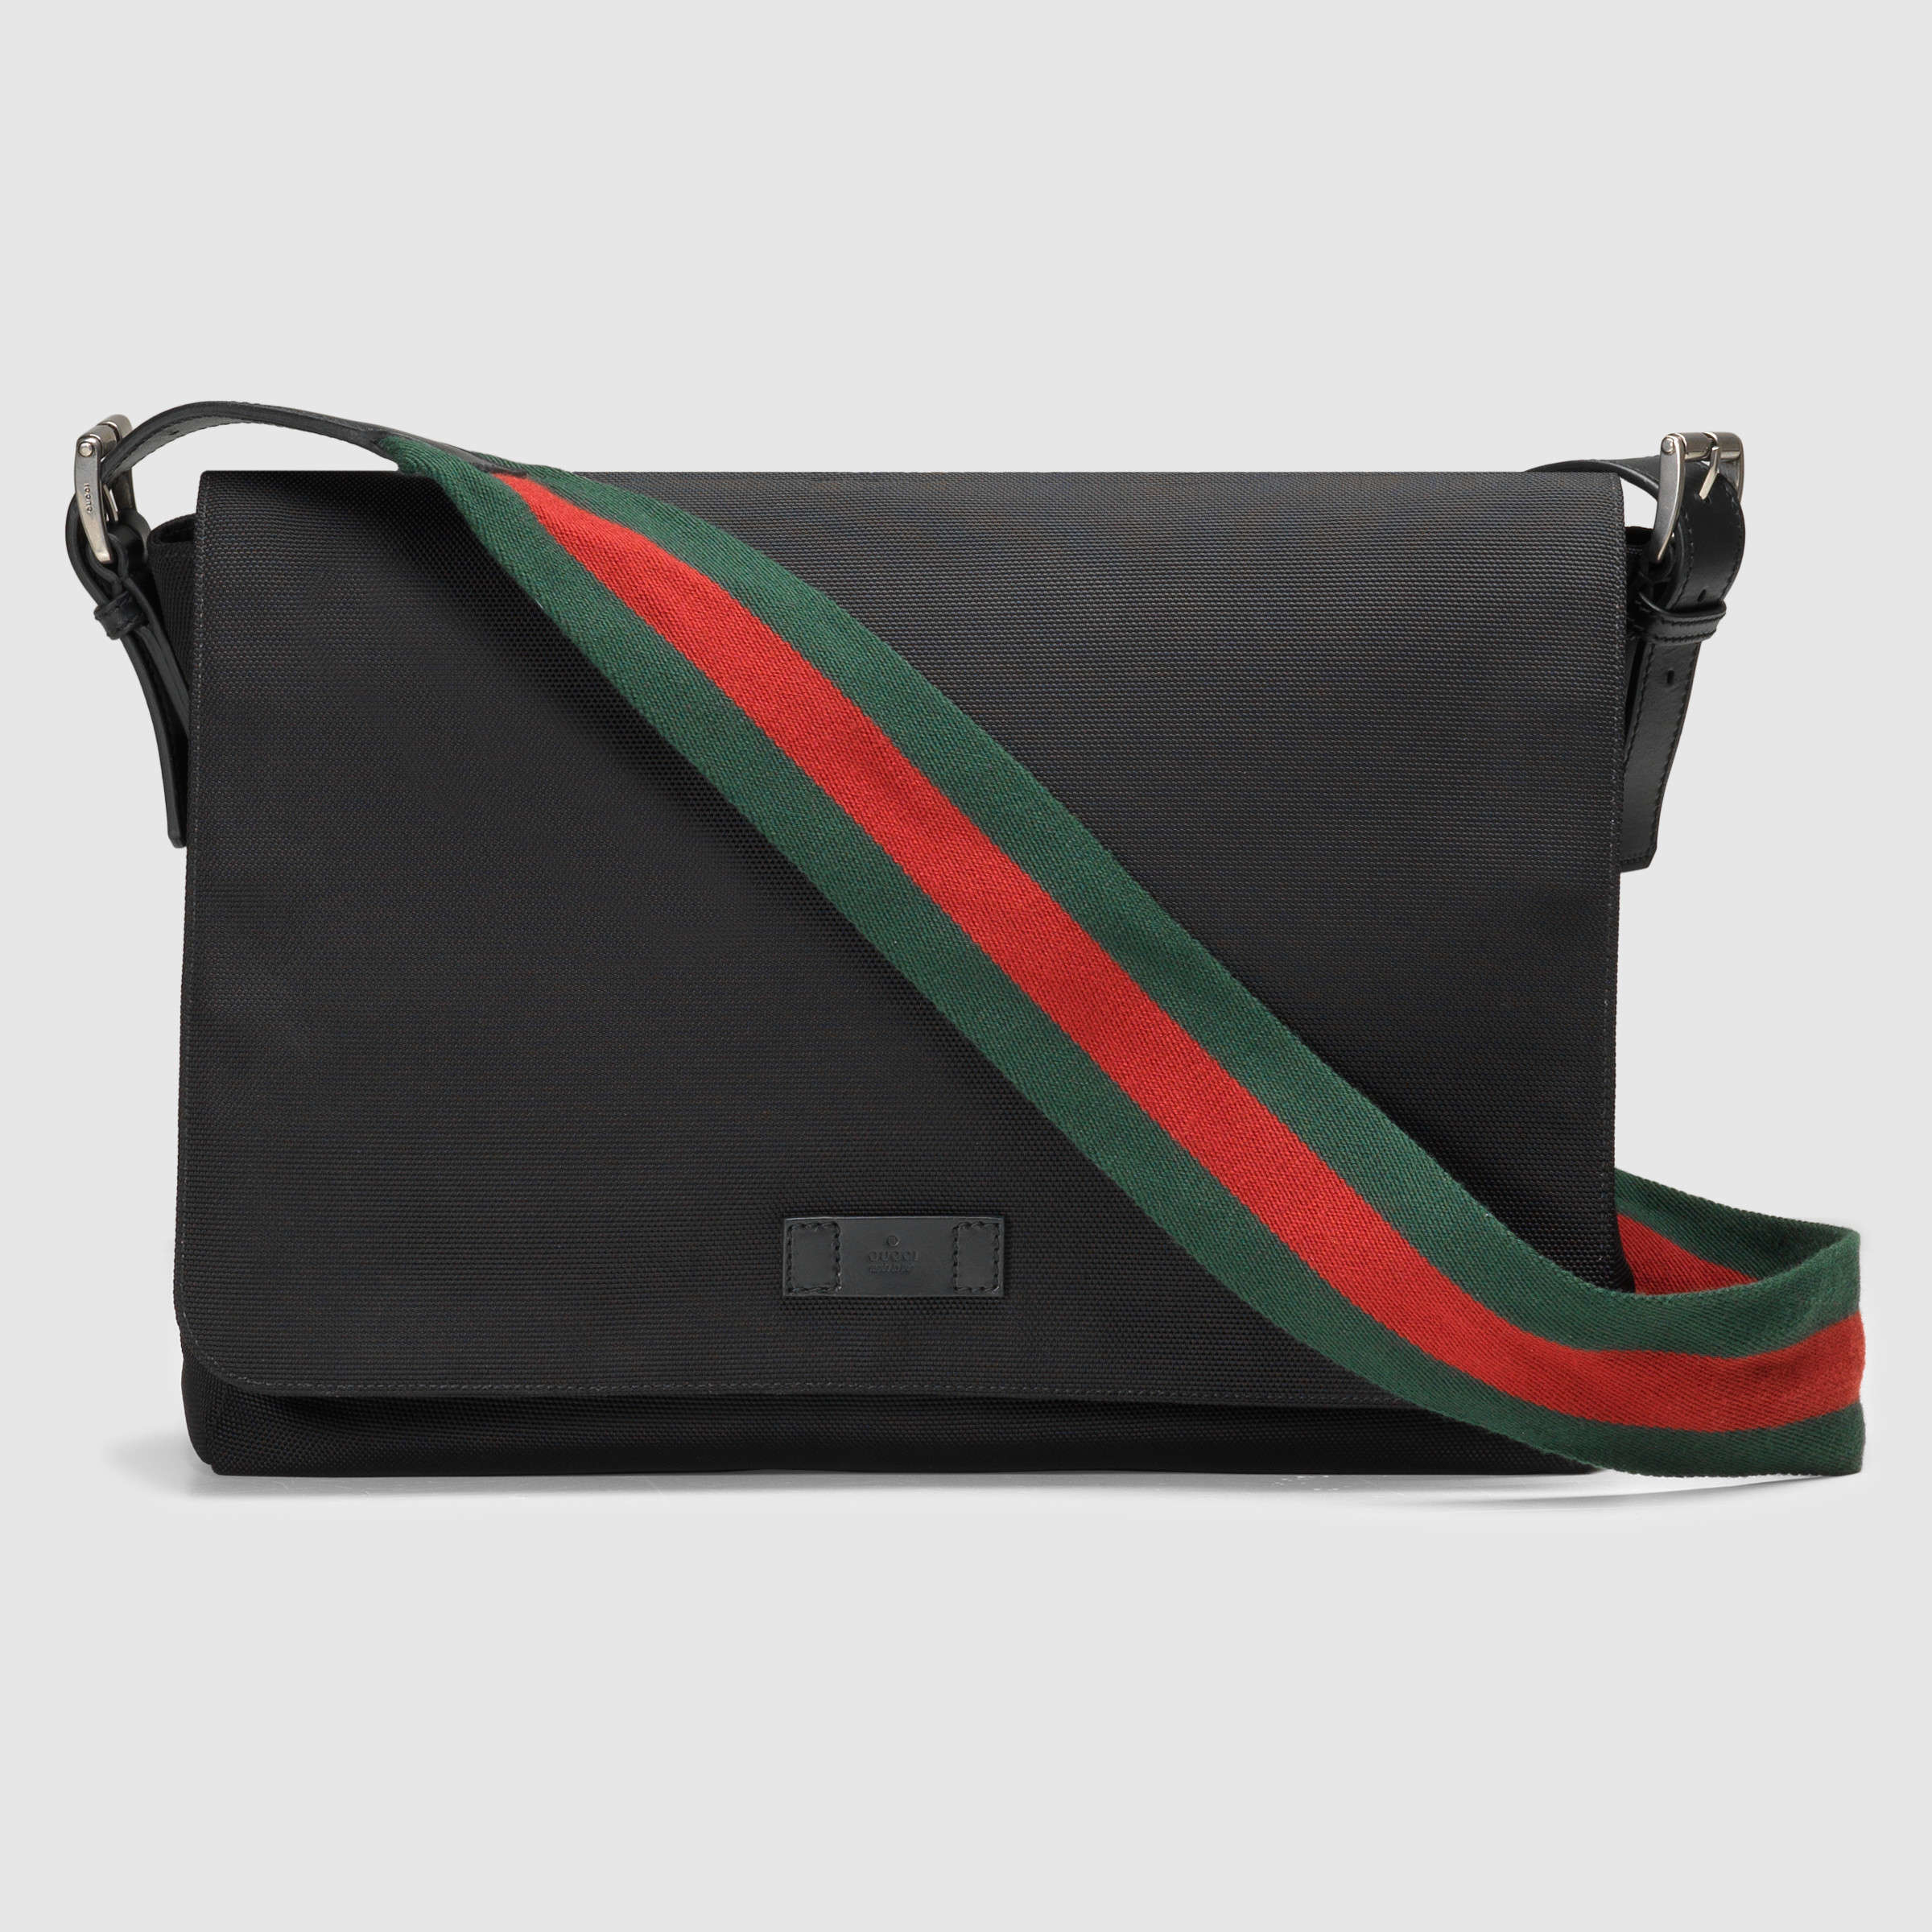 Gucci Black Techno Canvas Messenger Bag in Black for Men - Lyst